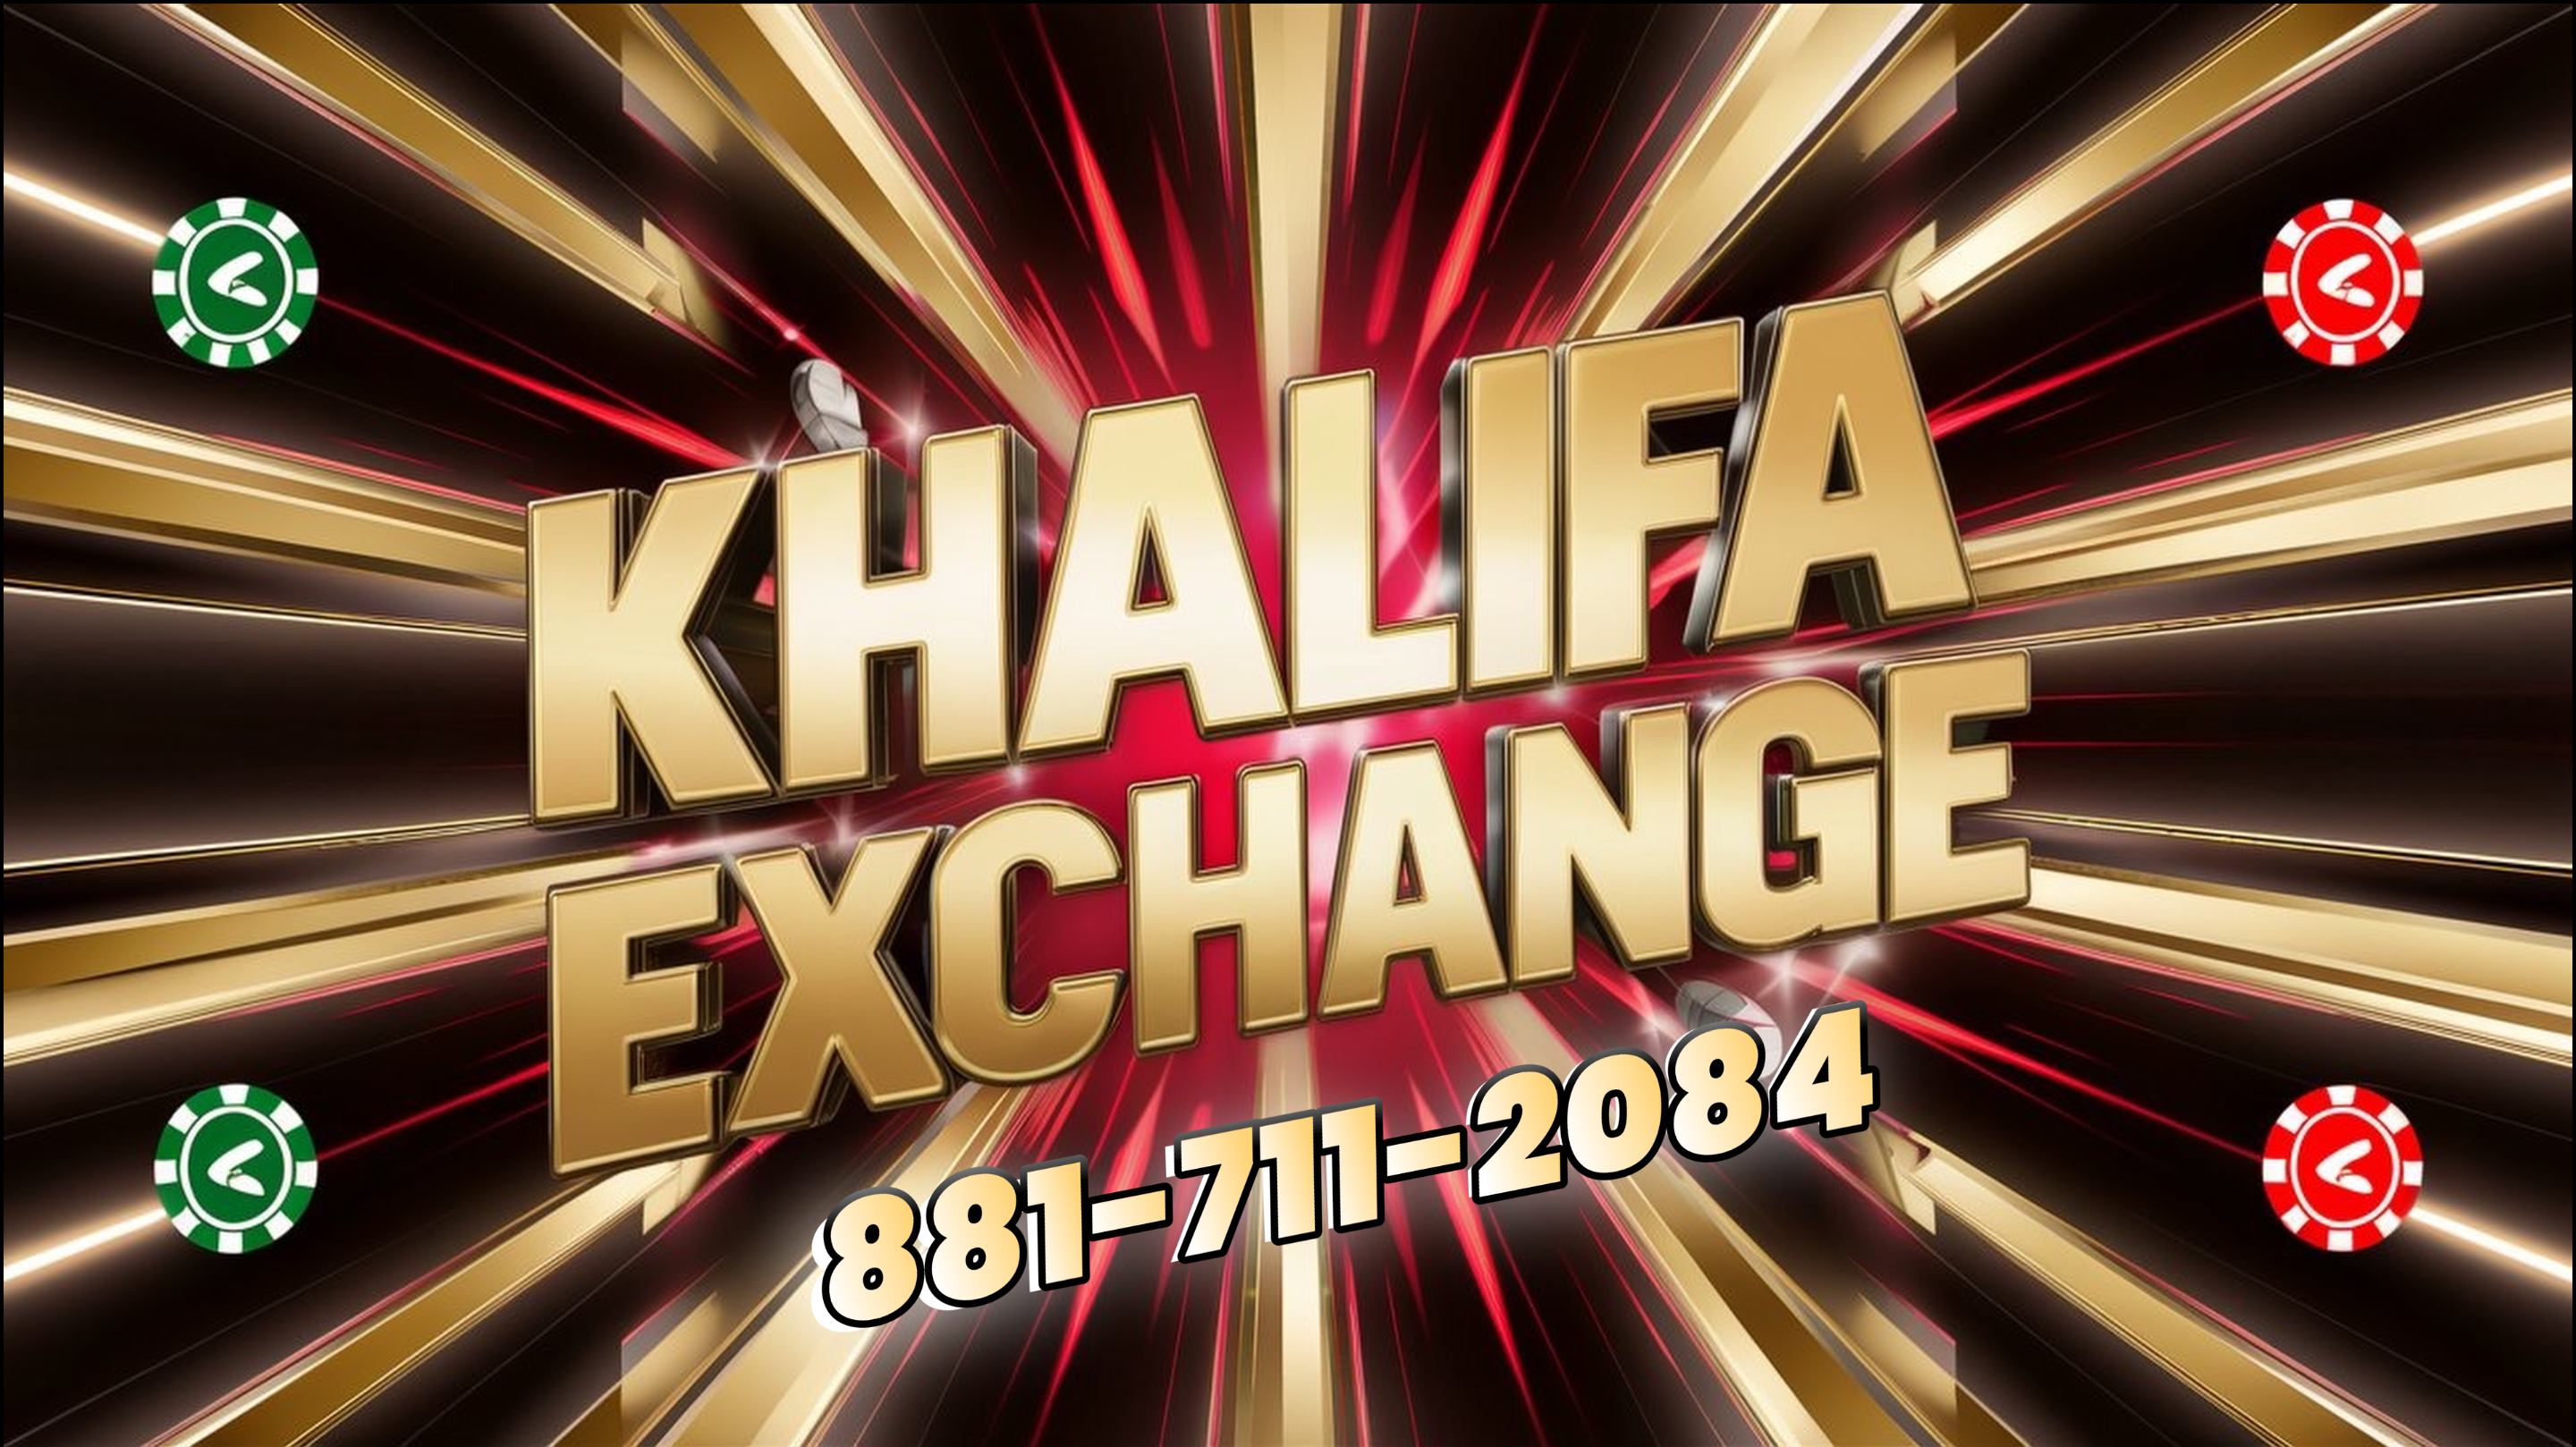 Khalifa Exchange